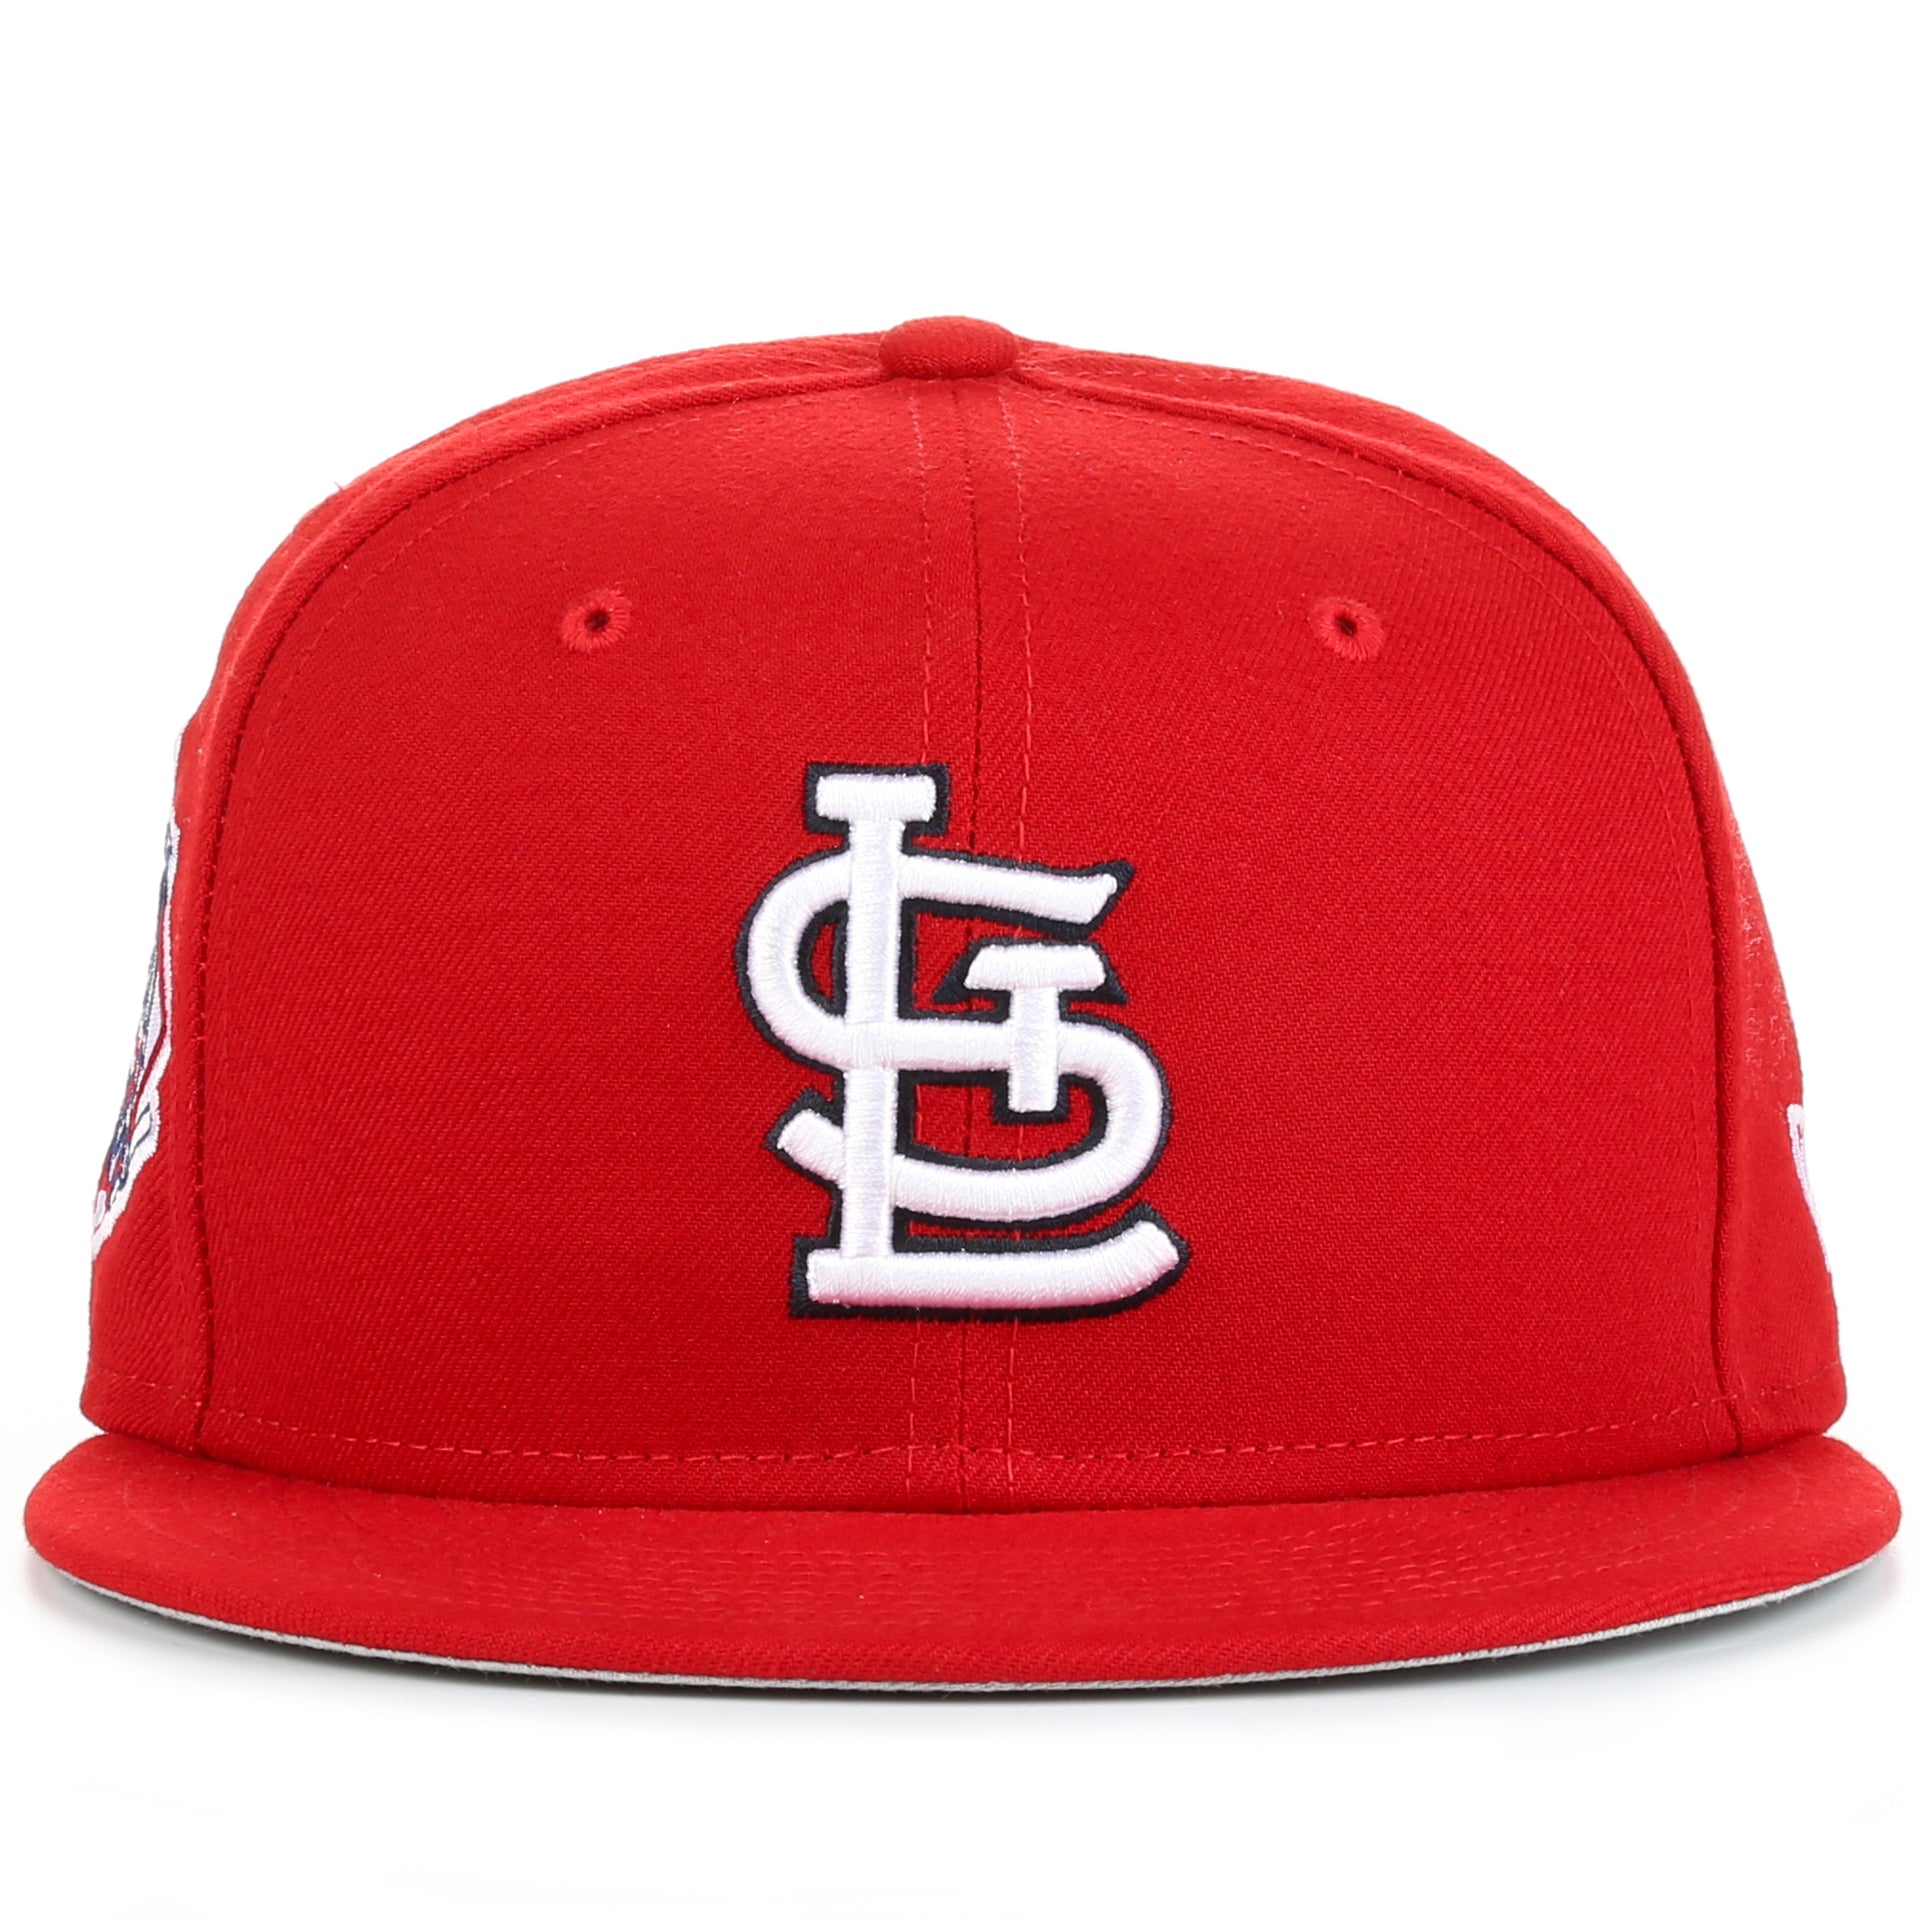 St Louis Cardinals Adjustable Hat Baseball Cap Red & Black